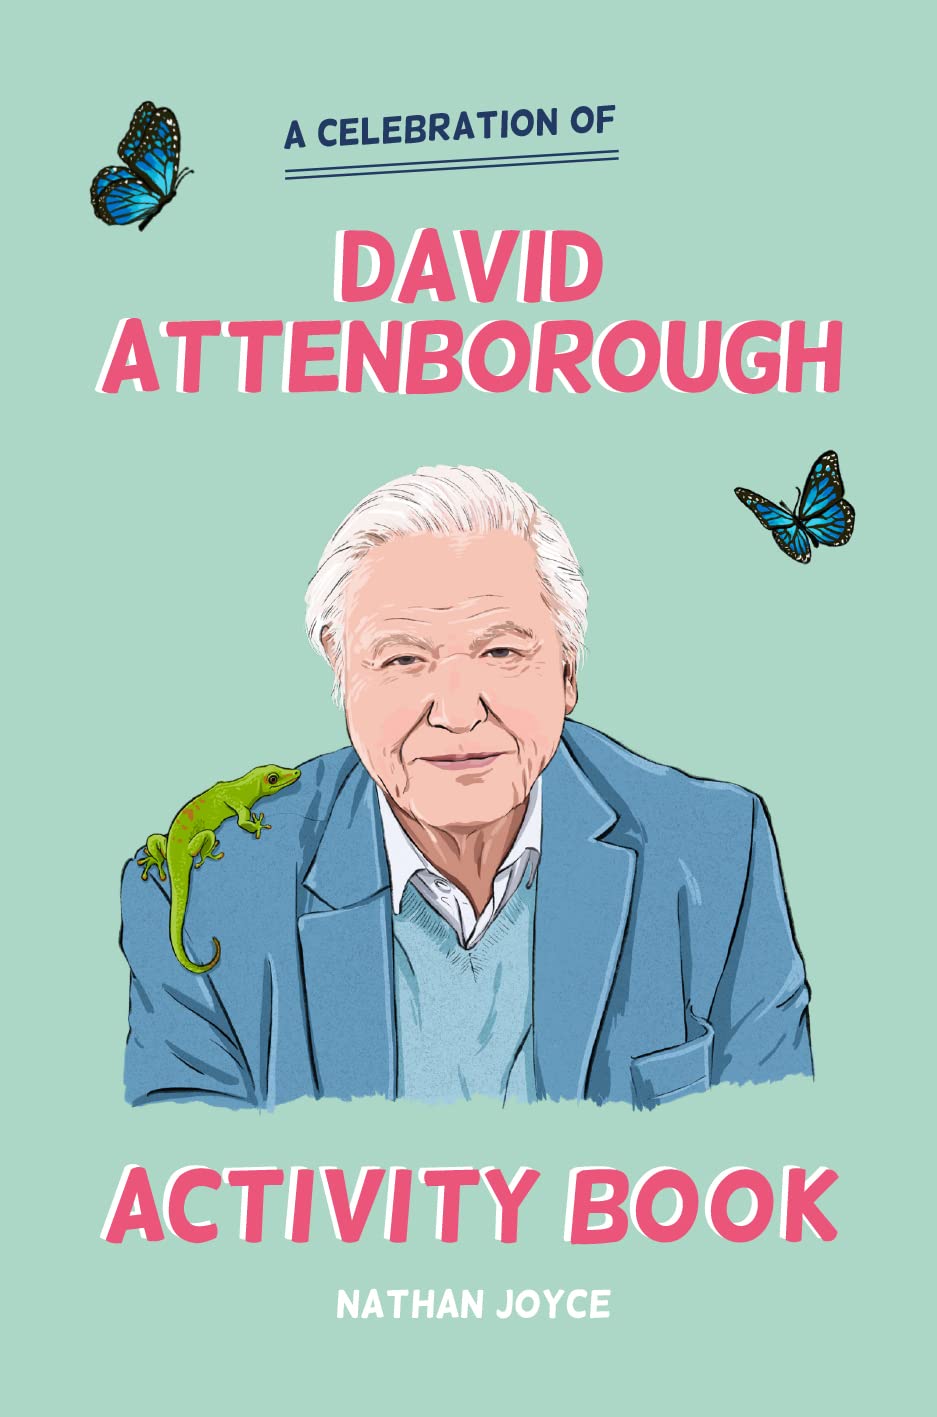 A Celebration of David Attenborough: The Activity Book Days of Wonder